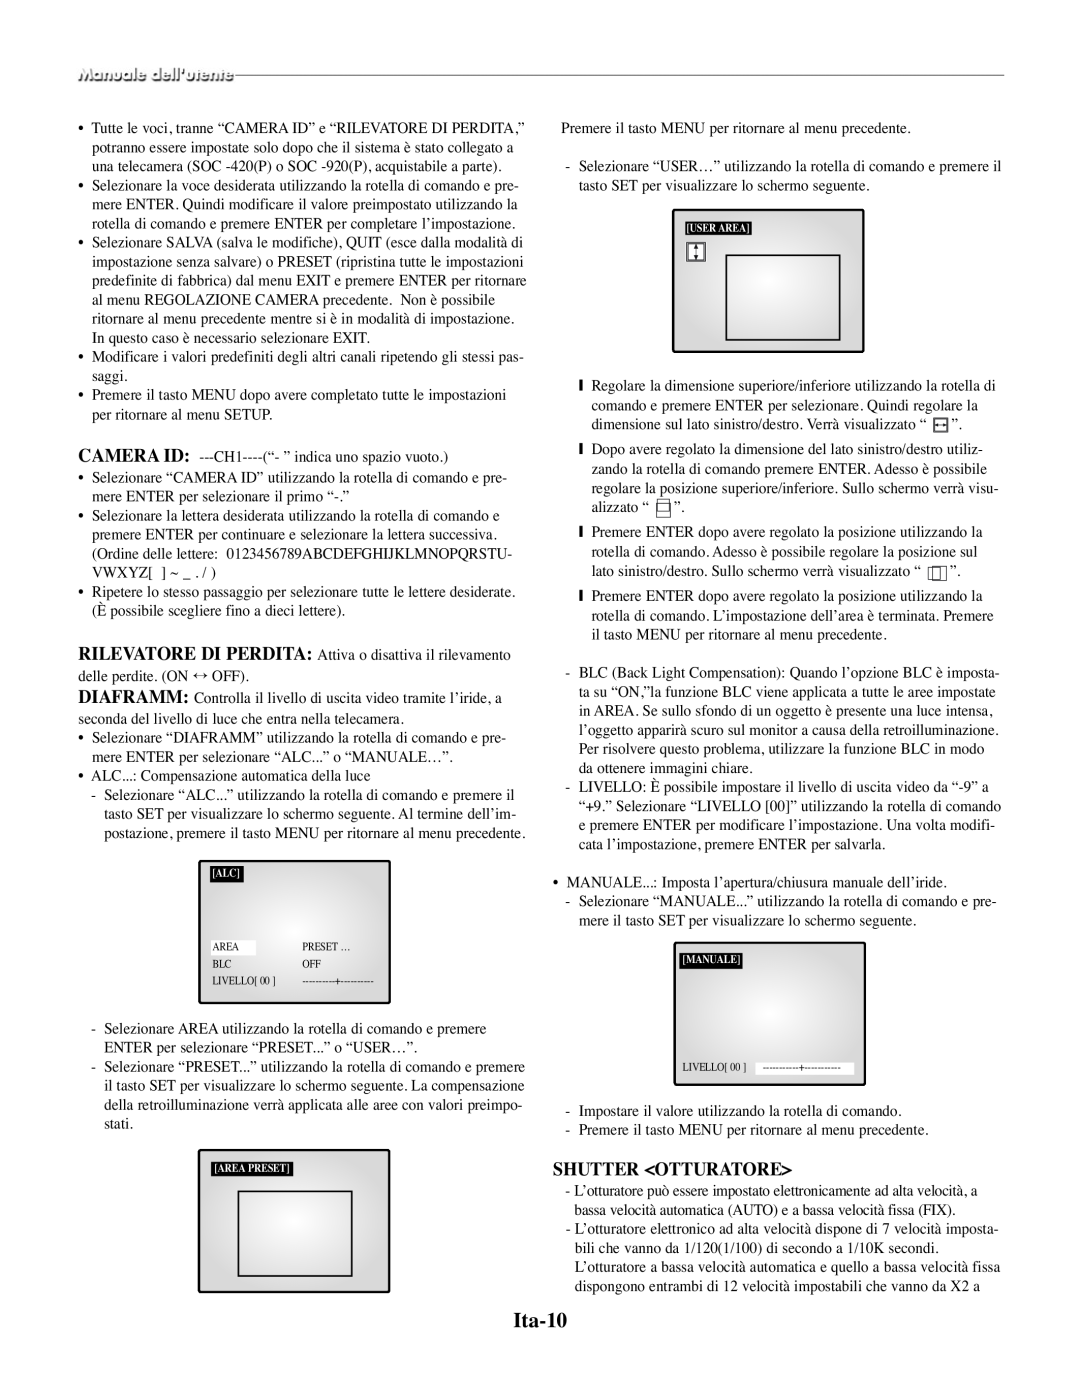 Samsung SMO-210TRP, SMO-210MP/UMG manual Ita-10, Shutter Otturatore 